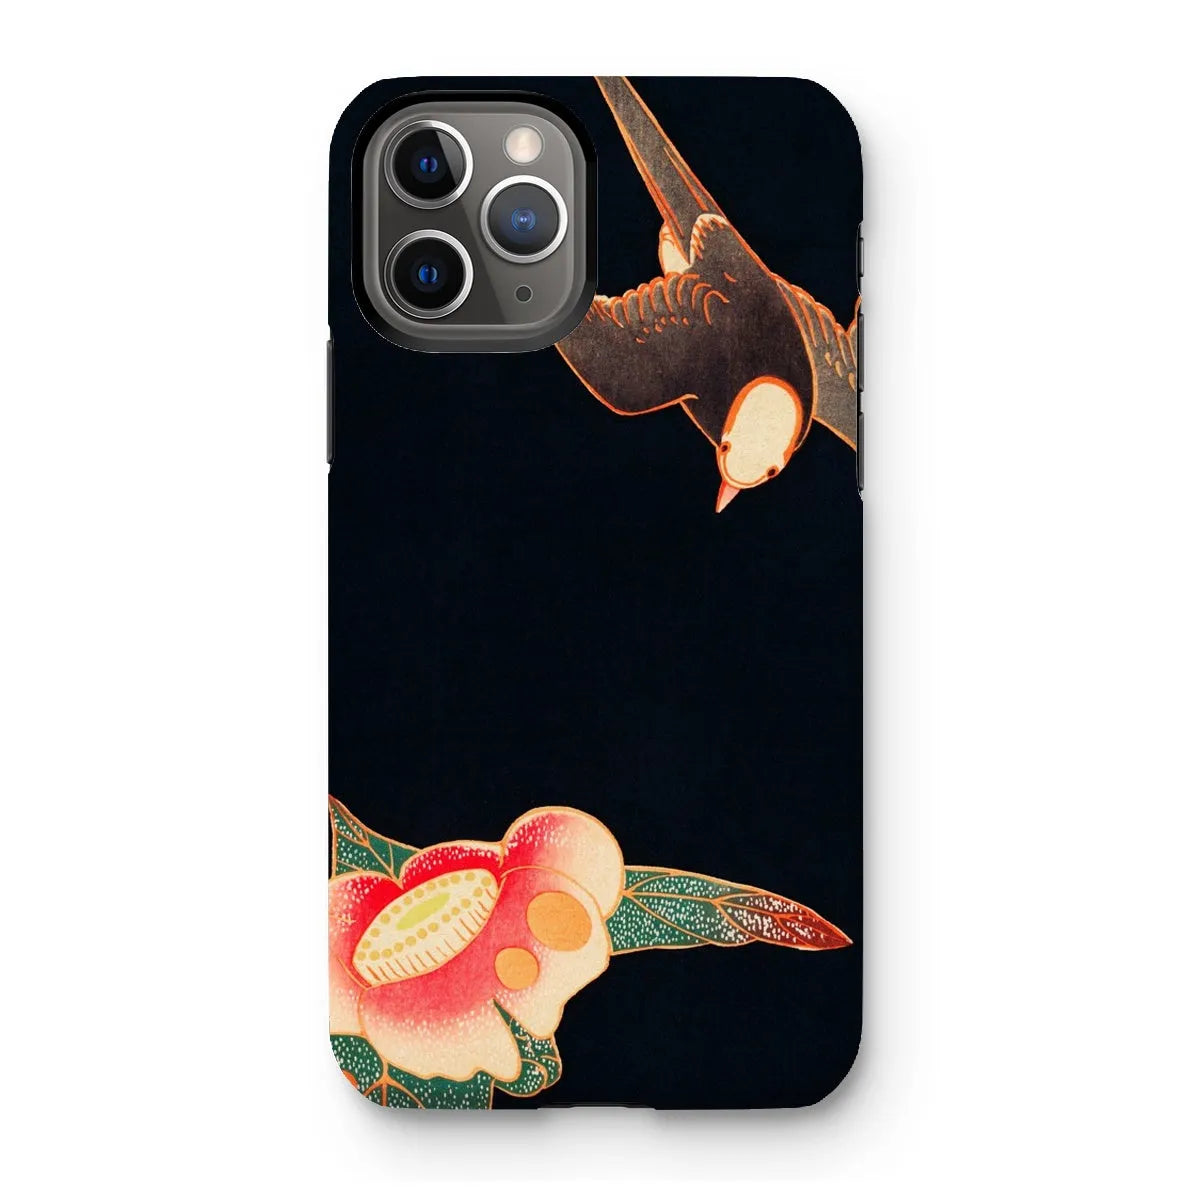 Swallow & Camellia - Meiji Era Art Phone Case - Ito Jakuchu - Iphone 11 Pro / Matte - Mobile Phone Cases - Aesthetic Art